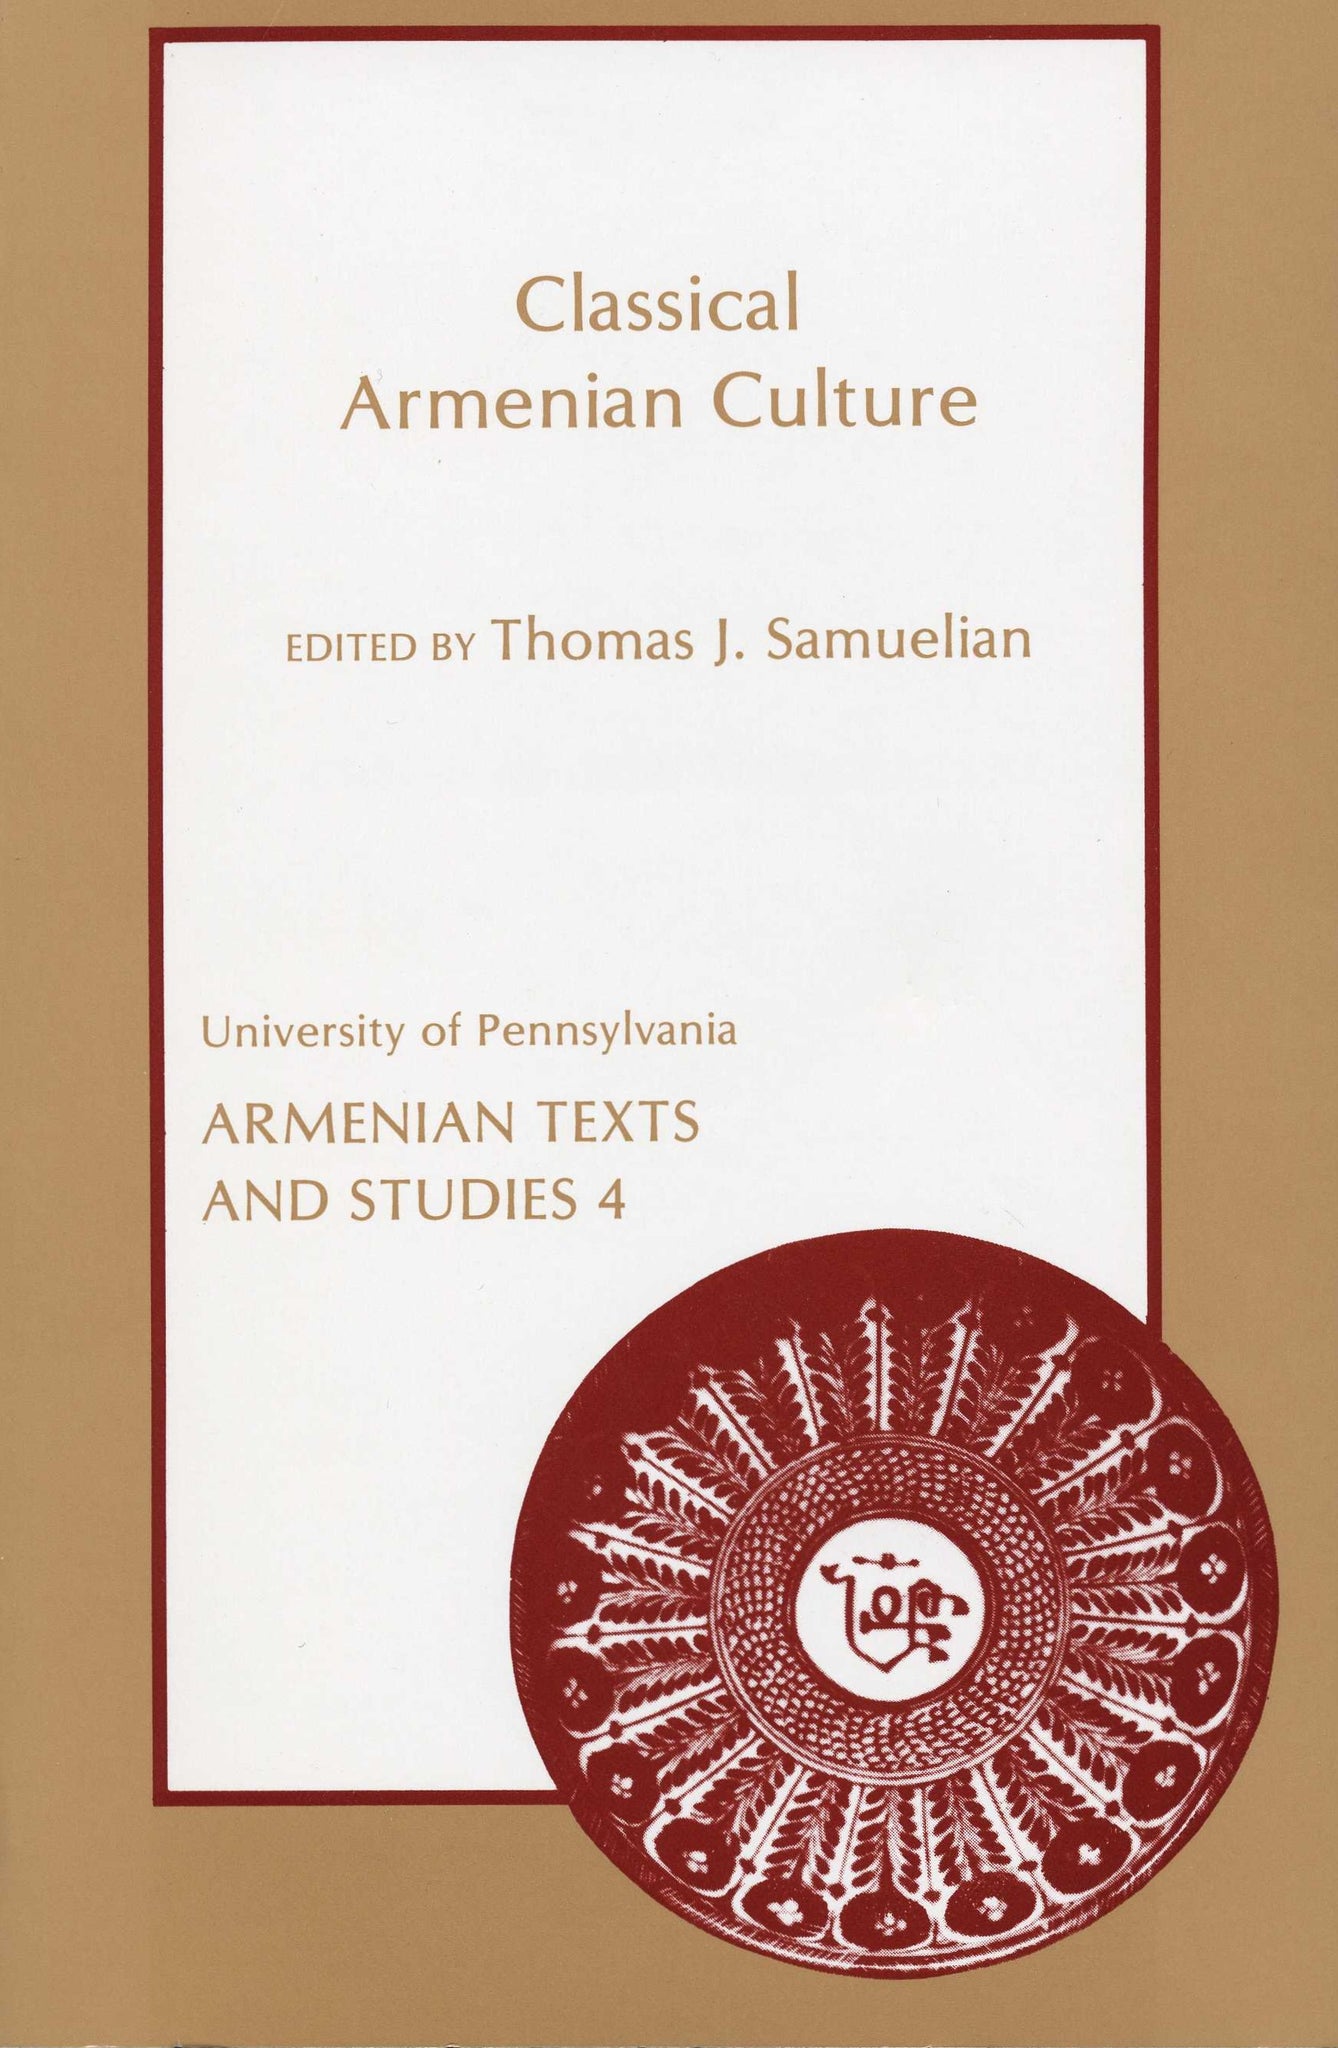 CLASSICAL ARMENIAN CULTURE